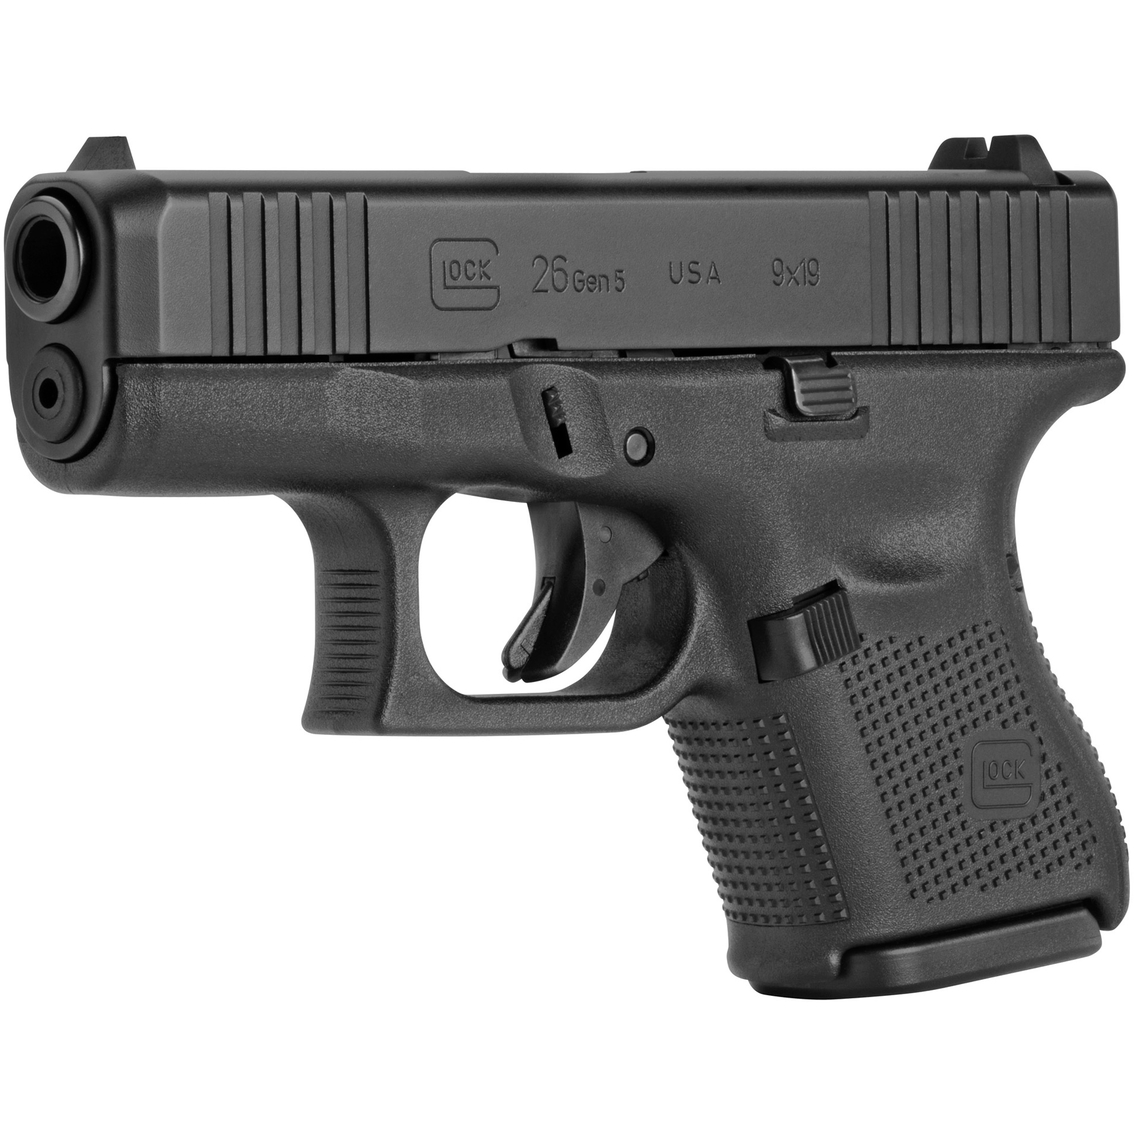 Glock 26 Gen5 Fs 9mm 3.4 In. Barrel 10 Rnd Pistol Black | Handguns | Sports  &amp; Outdoors | Shop The Exchange